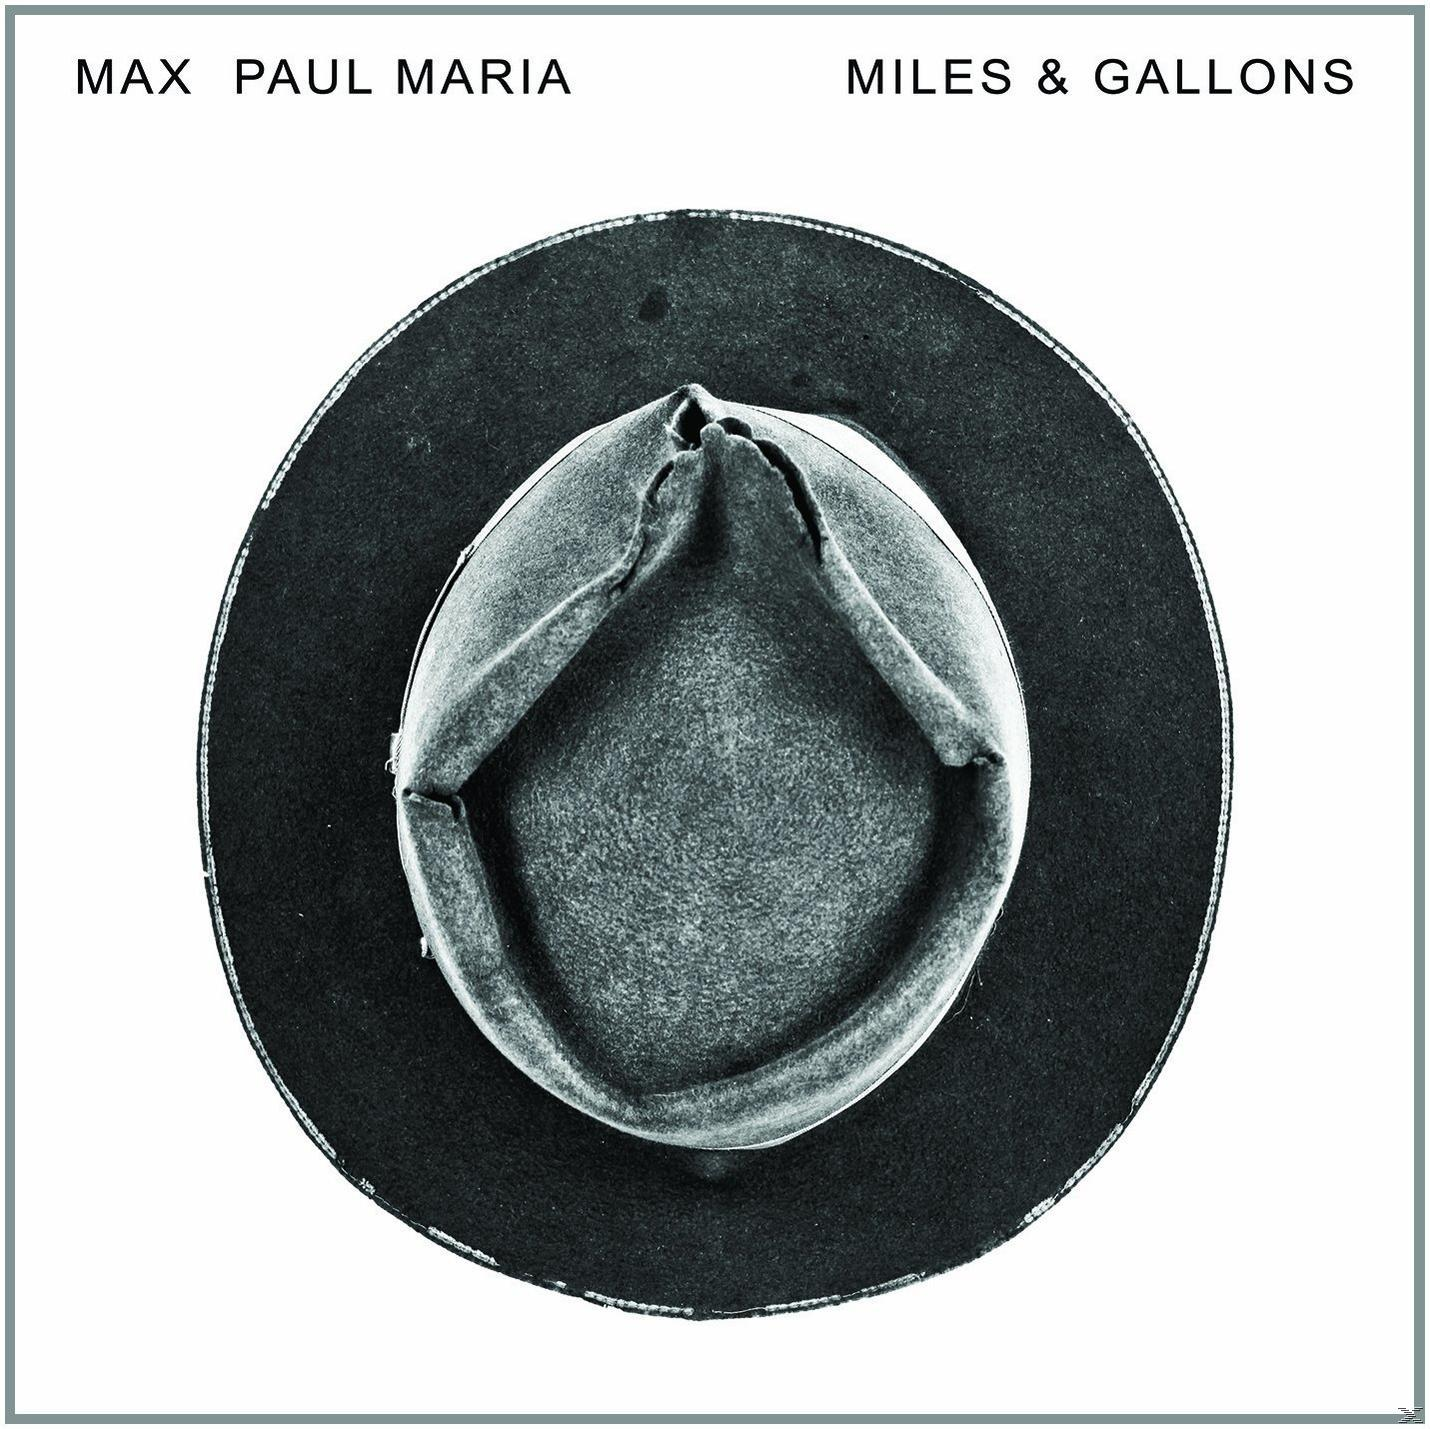 Maria Paul (Vinyl) - Gallons Miles - & Max